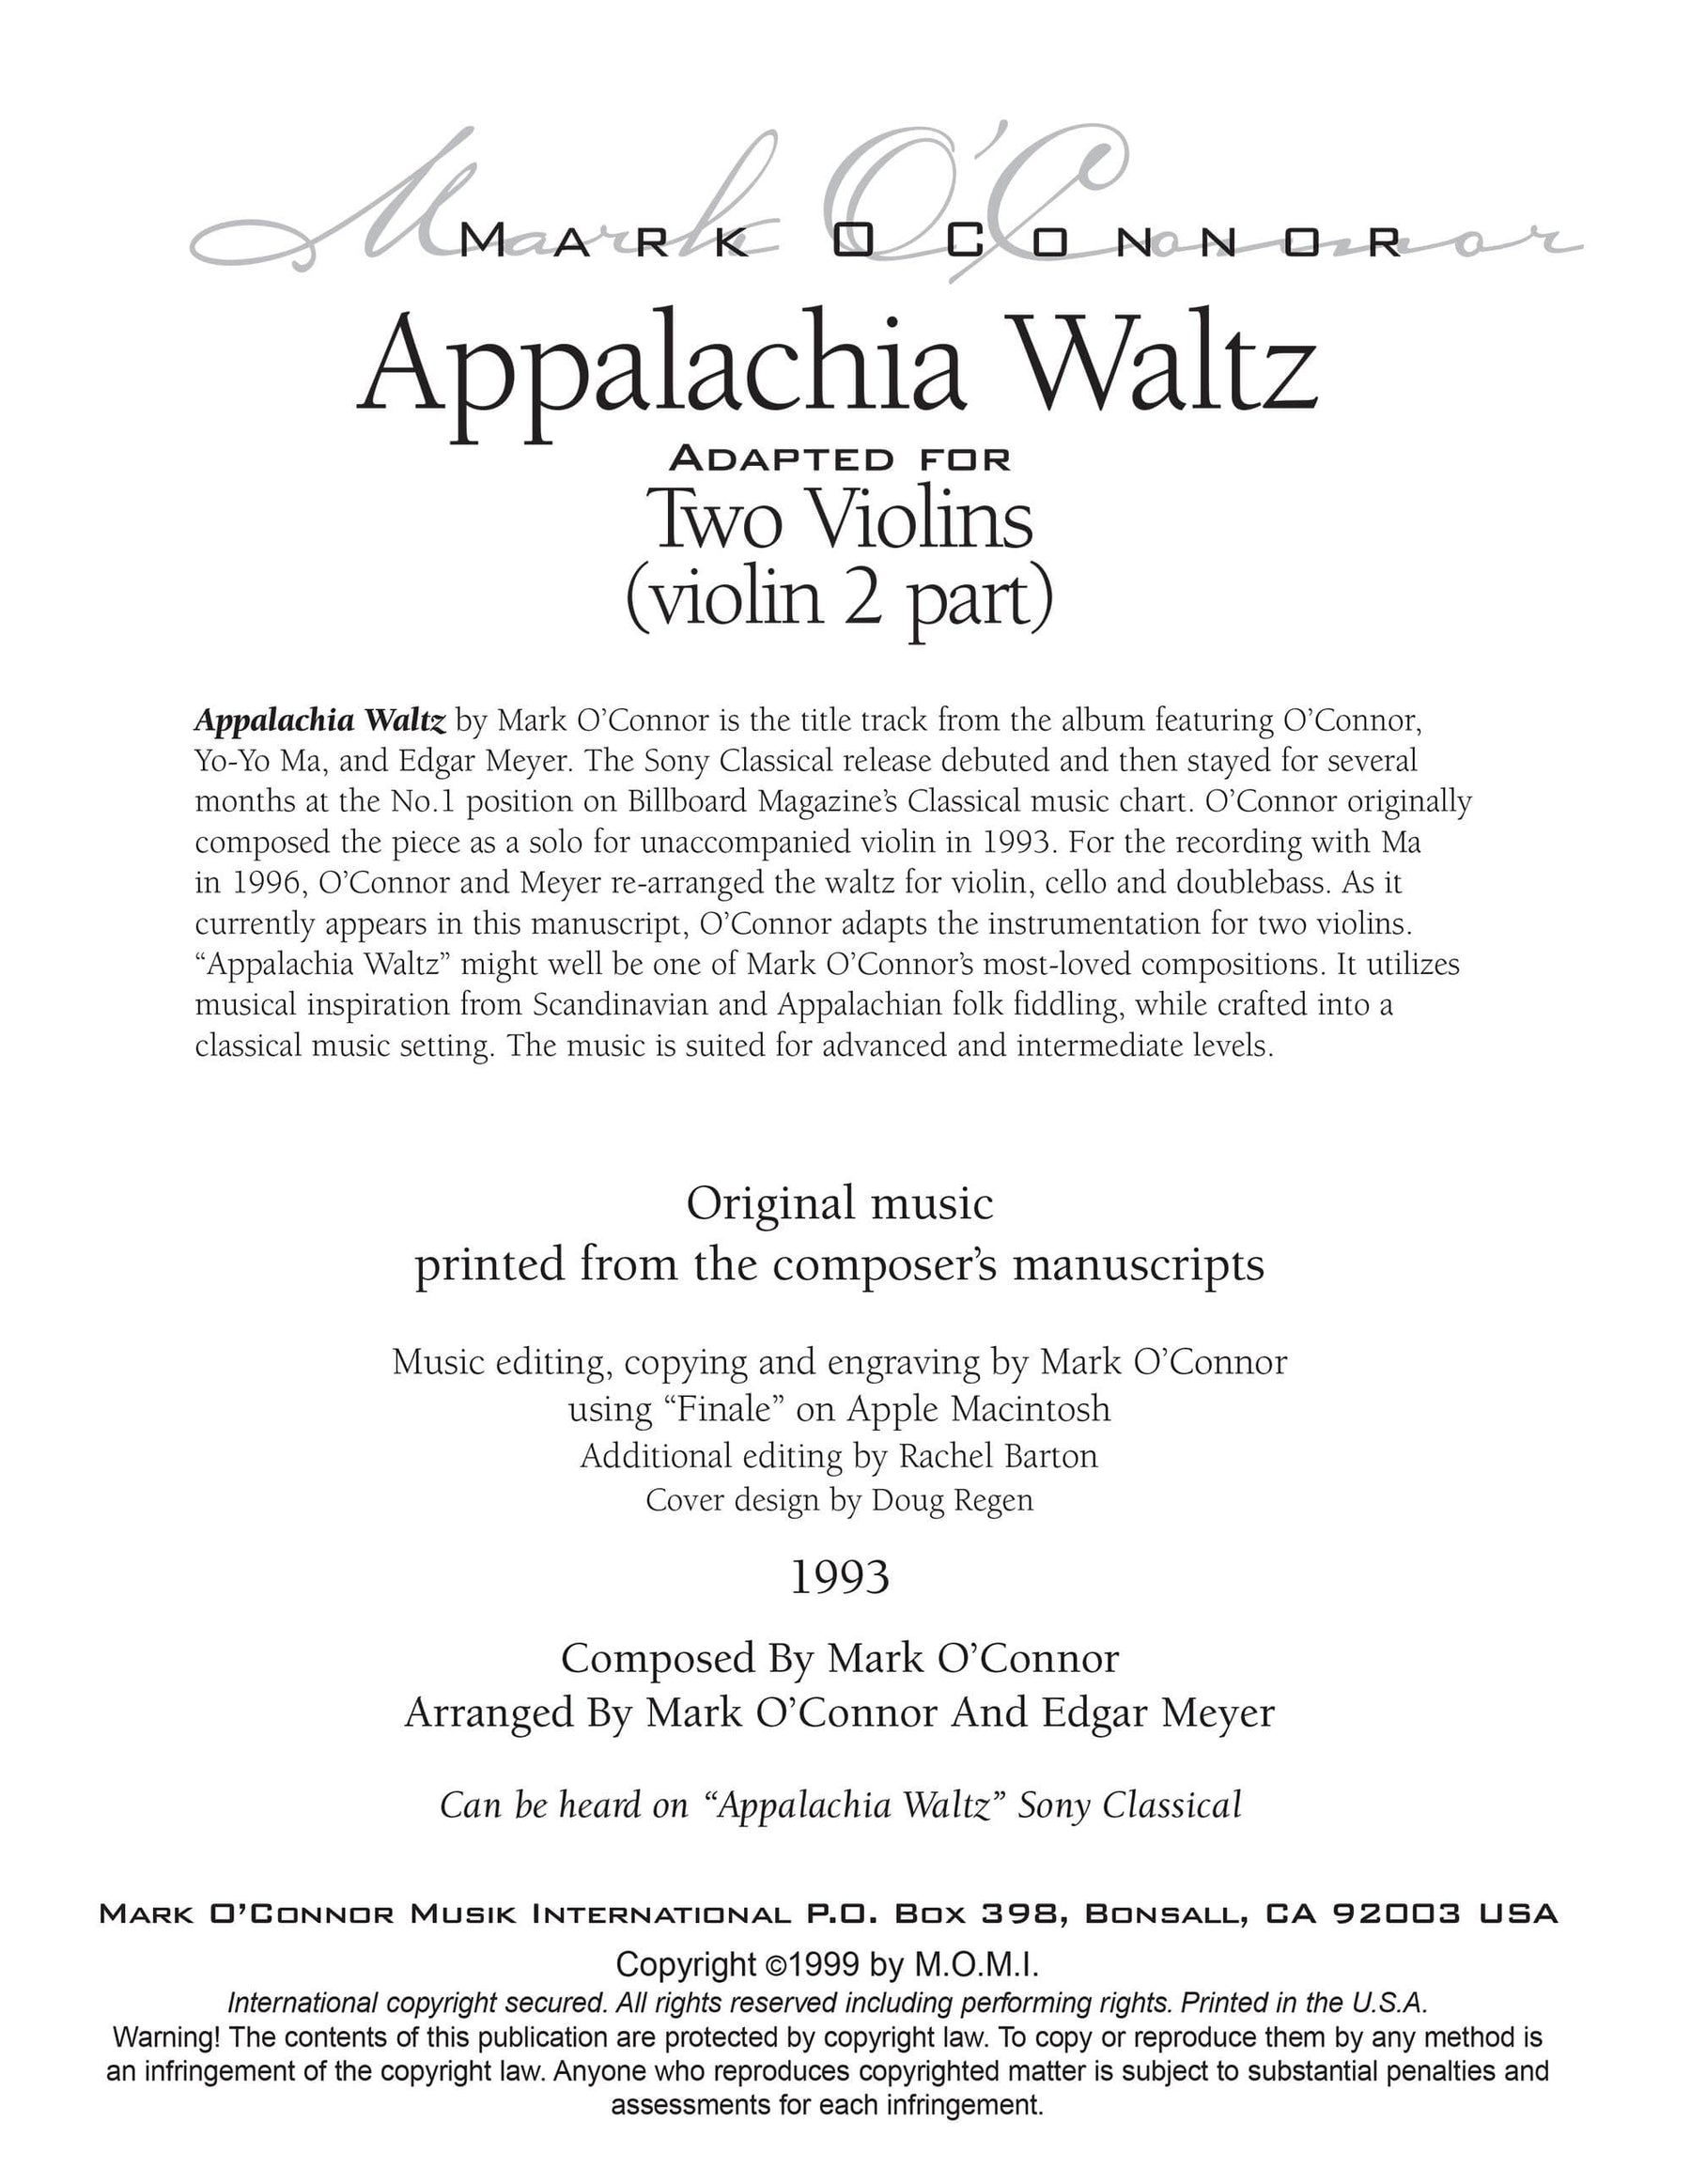 O'Connor, Mark - Appalachia Waltz for 2 Violins - Violin 2 - Digital Download